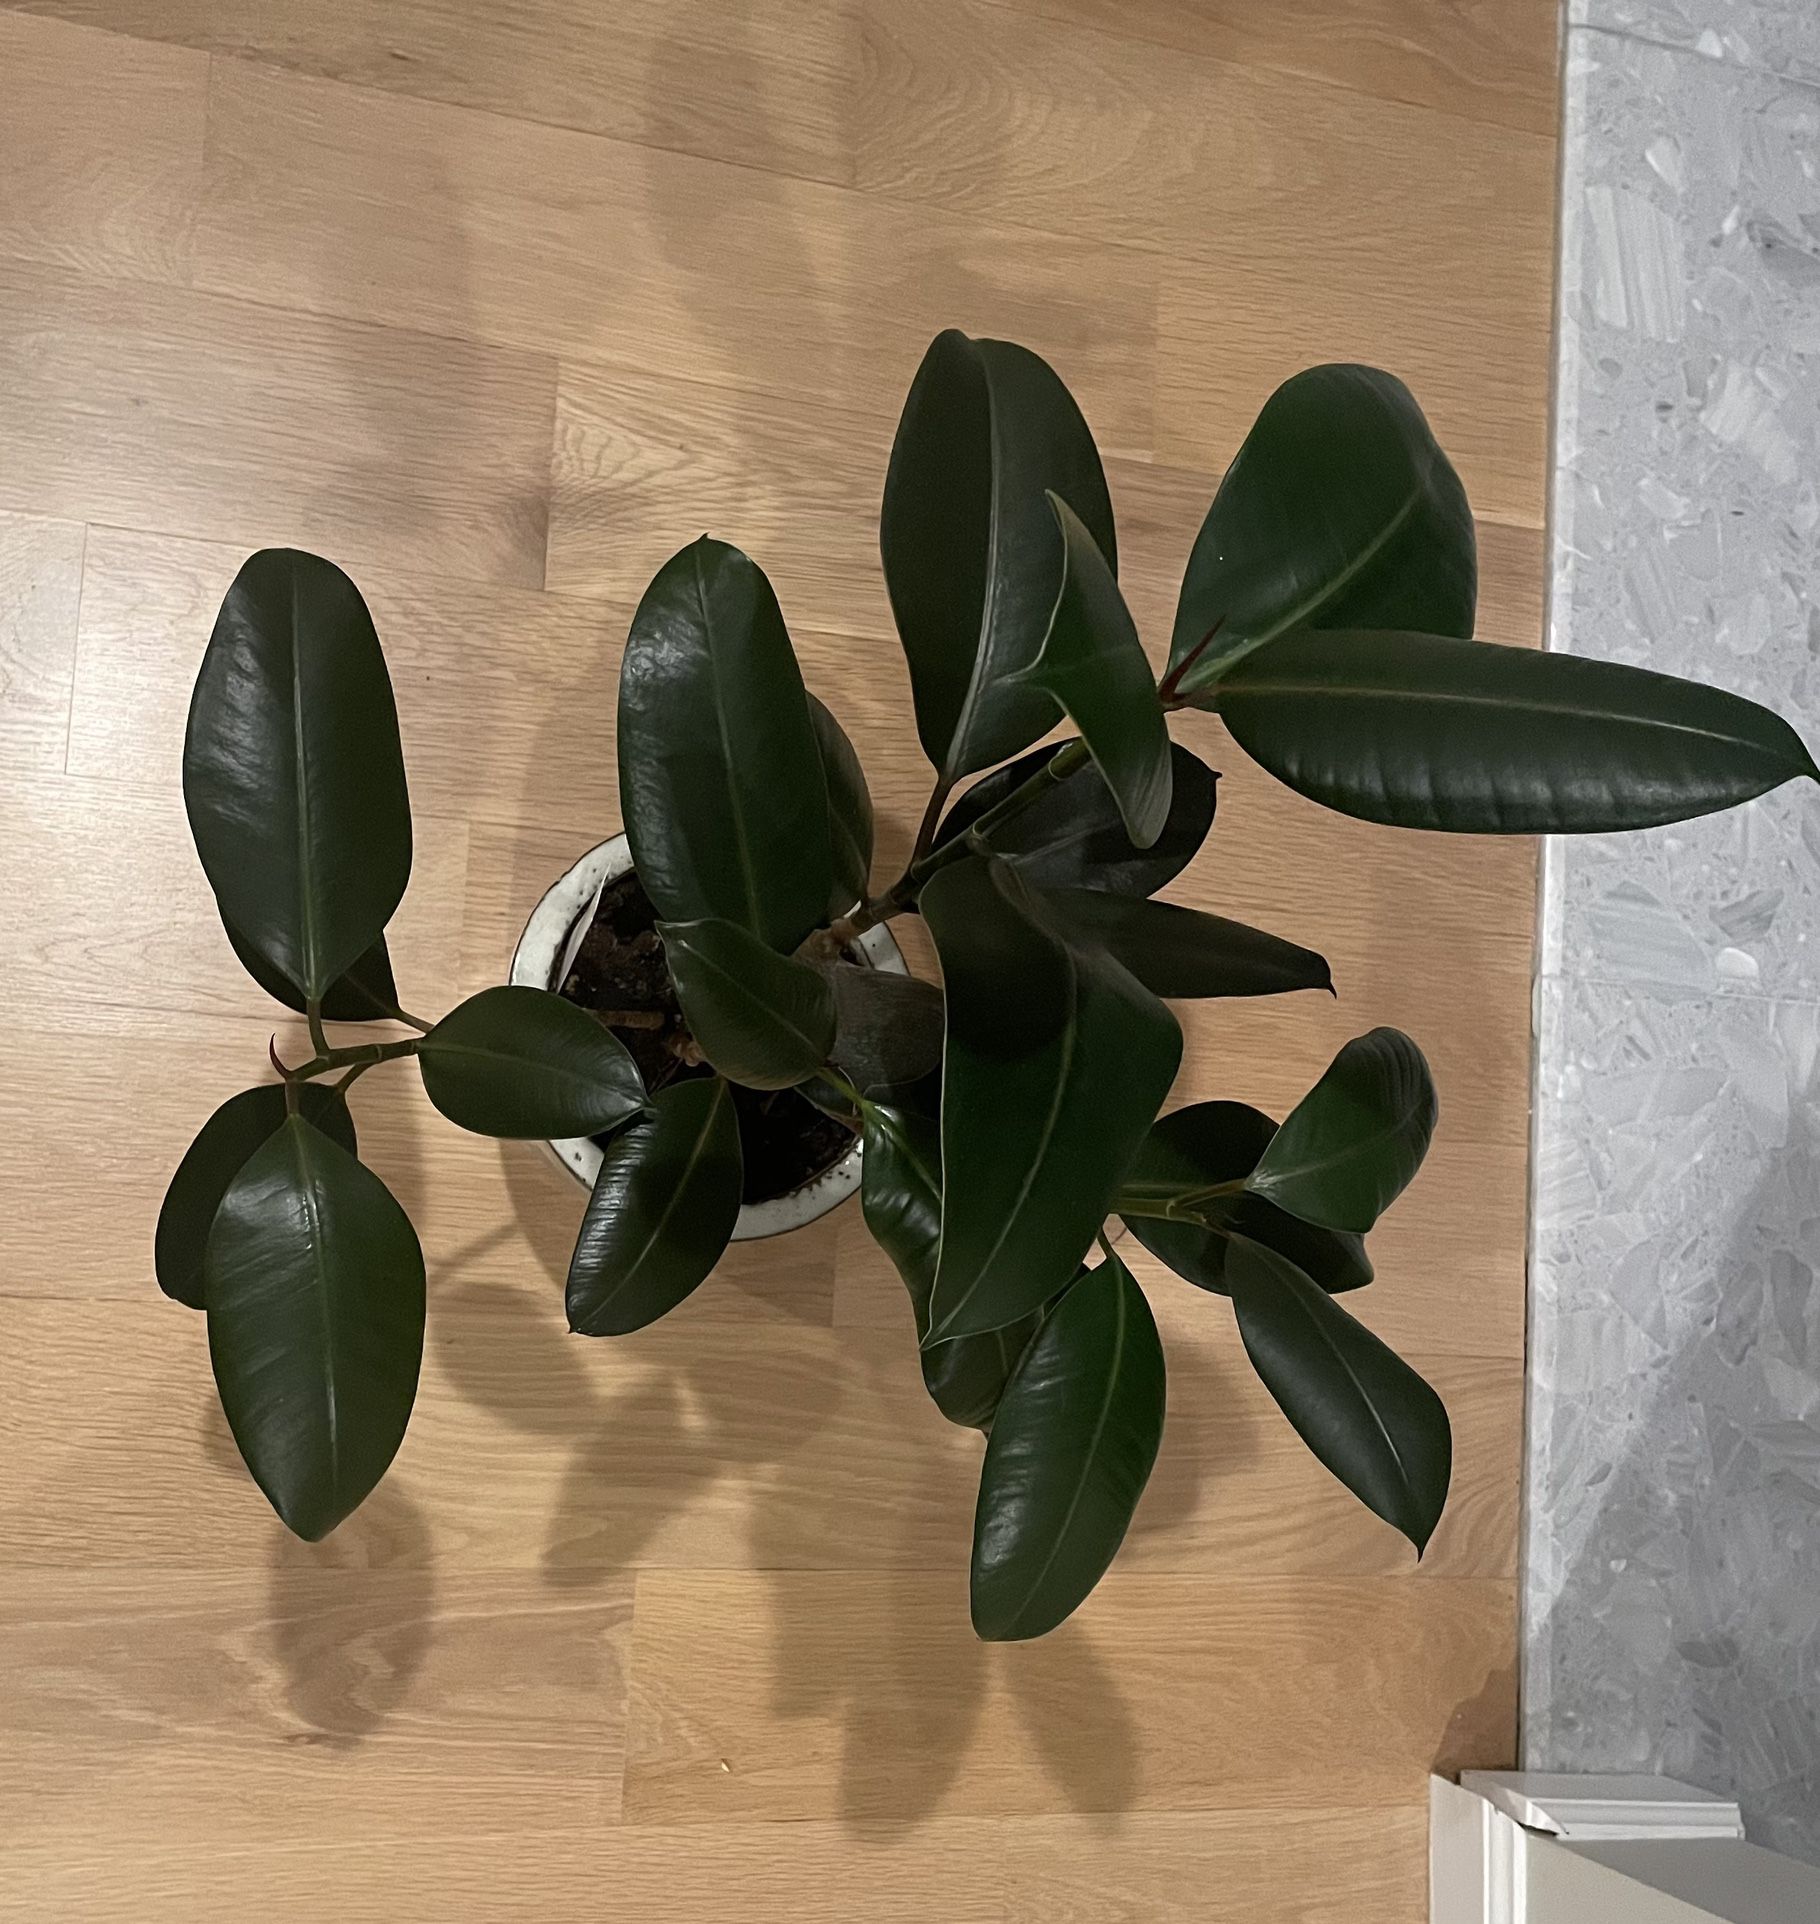 Rubber Ficus Plant with 6” Ceramic Pot